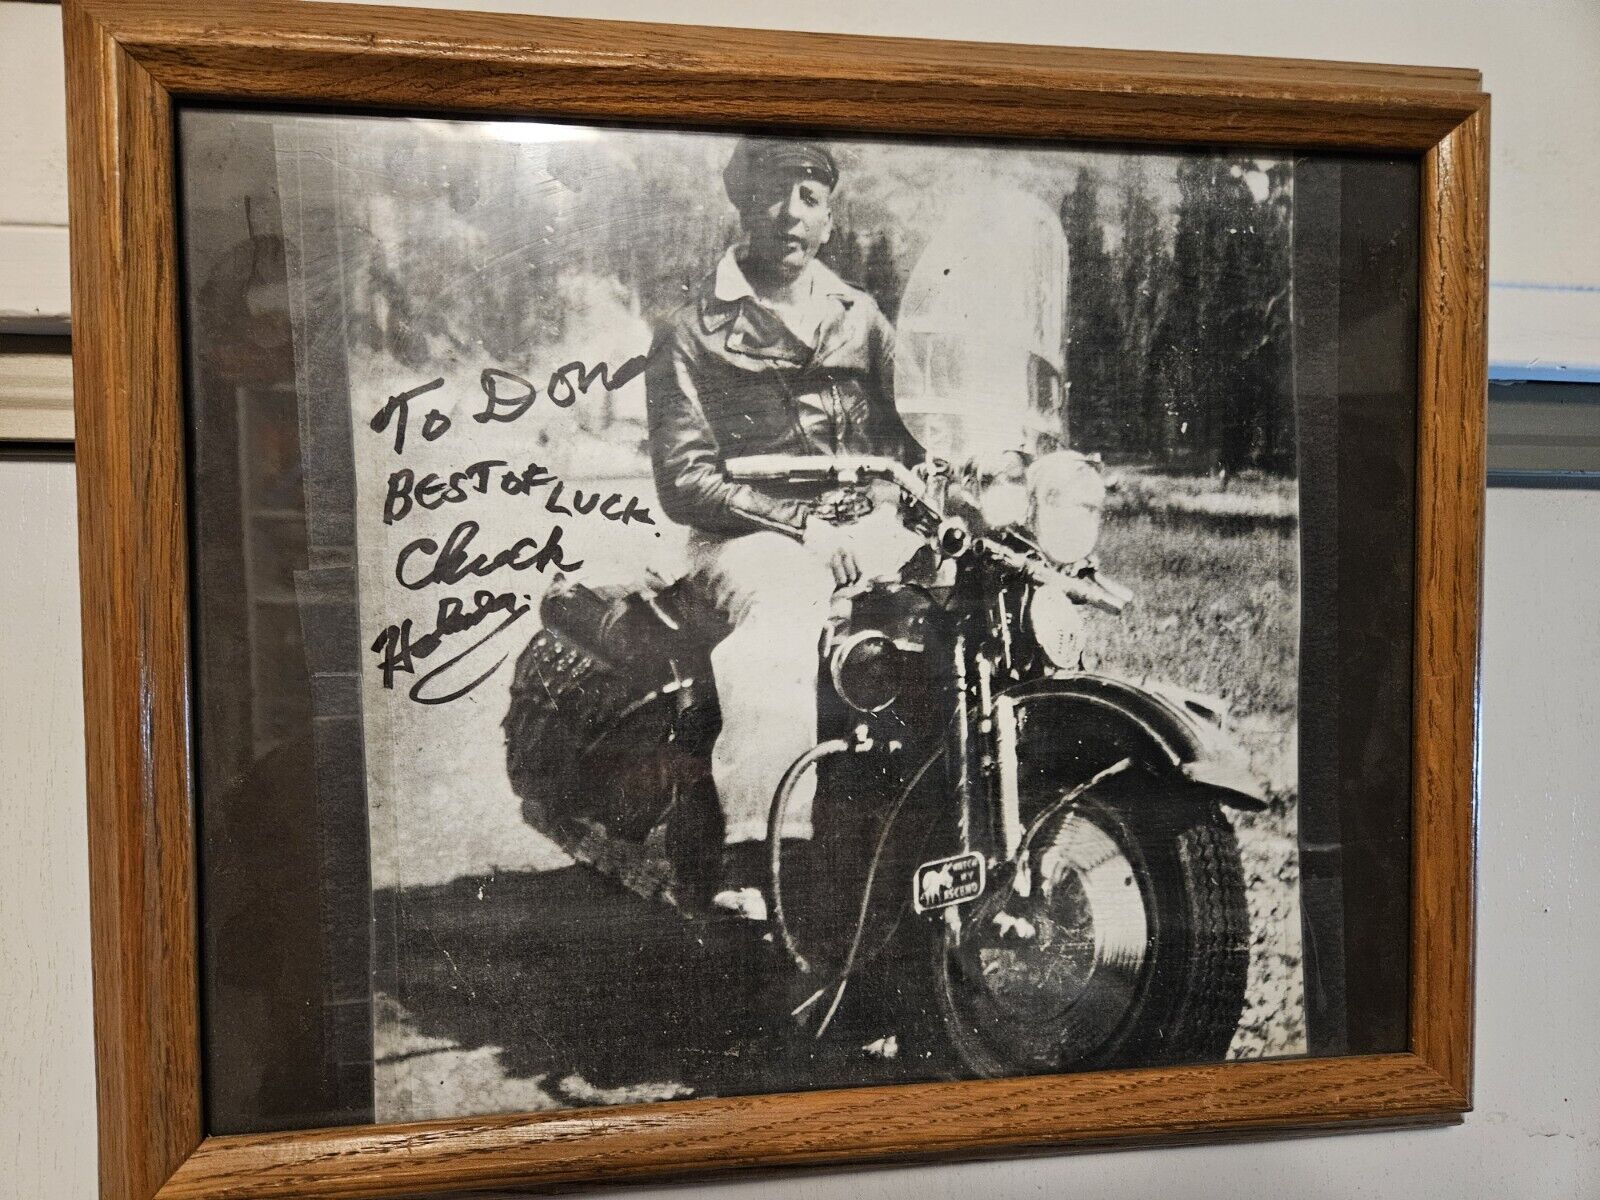 UNDER THE WILLOW PHOTO GALLERY ABI Harley-Davidson  VTG Signed & Framed Photo